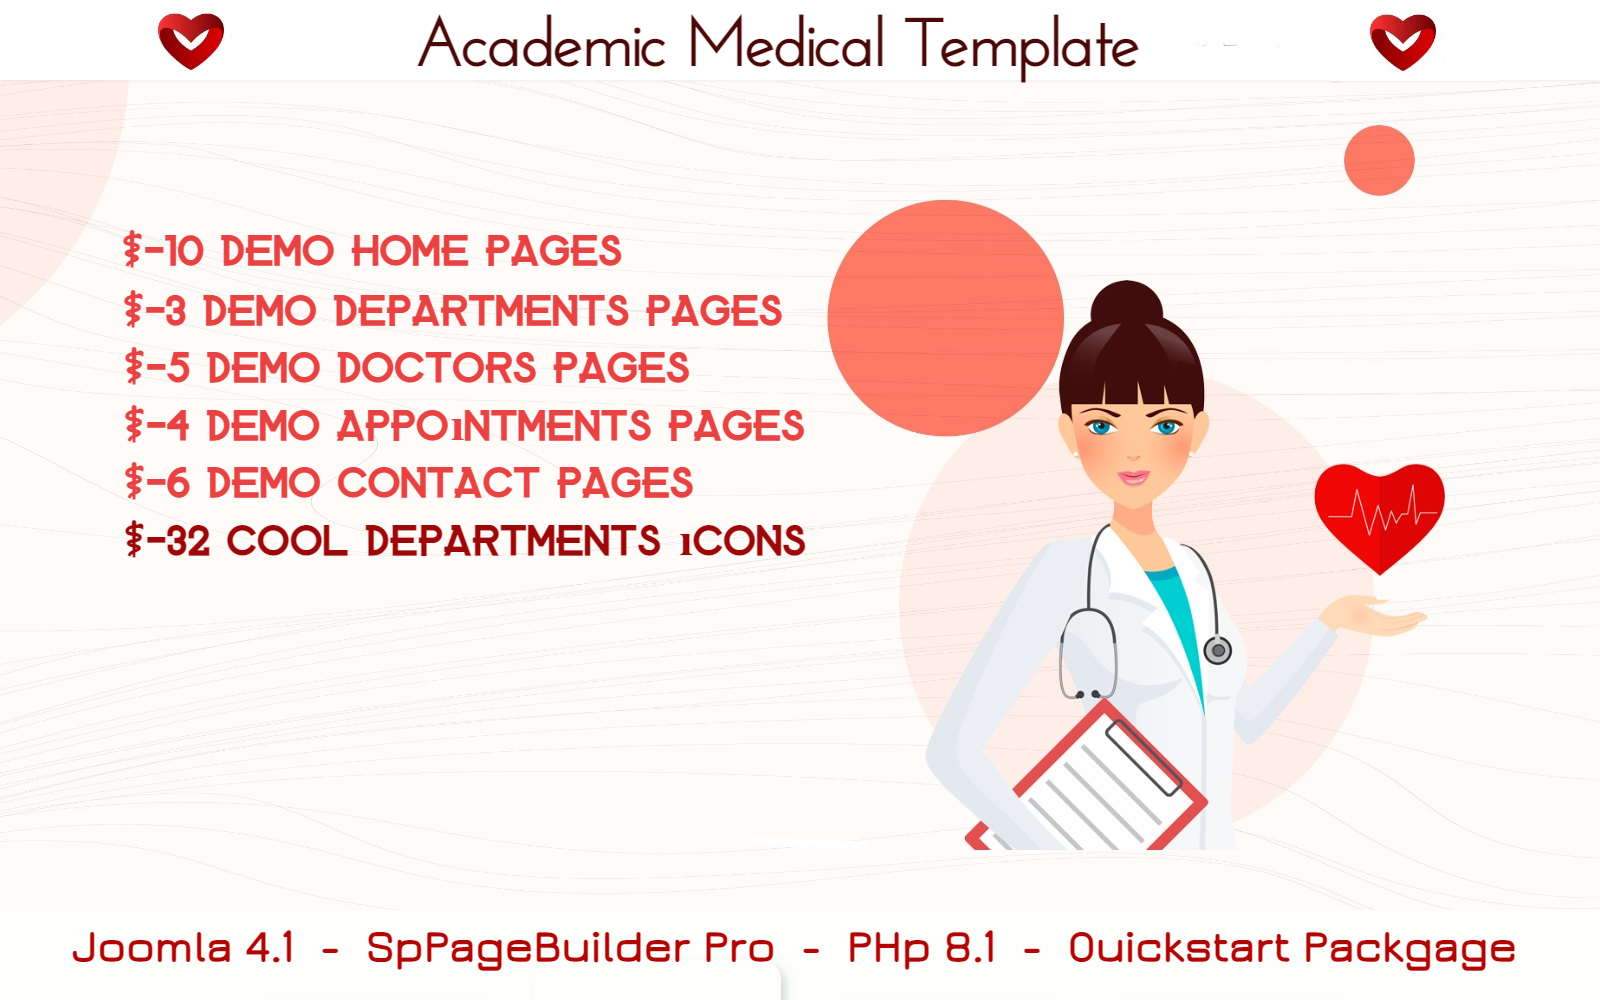 Academic Medical and Health Joomla4 Template